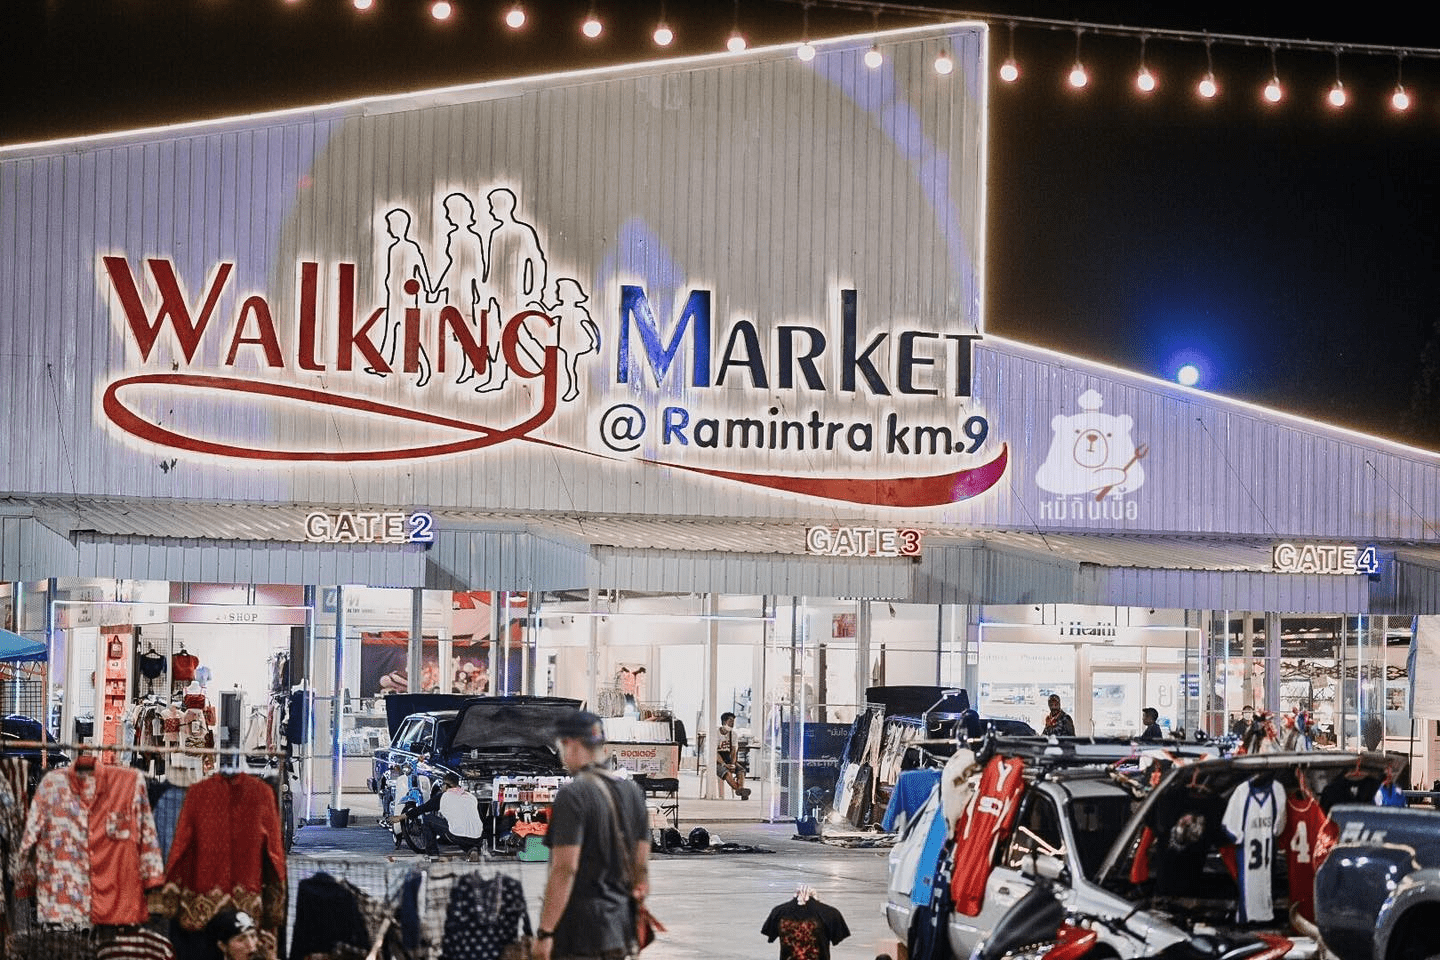 New Night Market in Bangkok